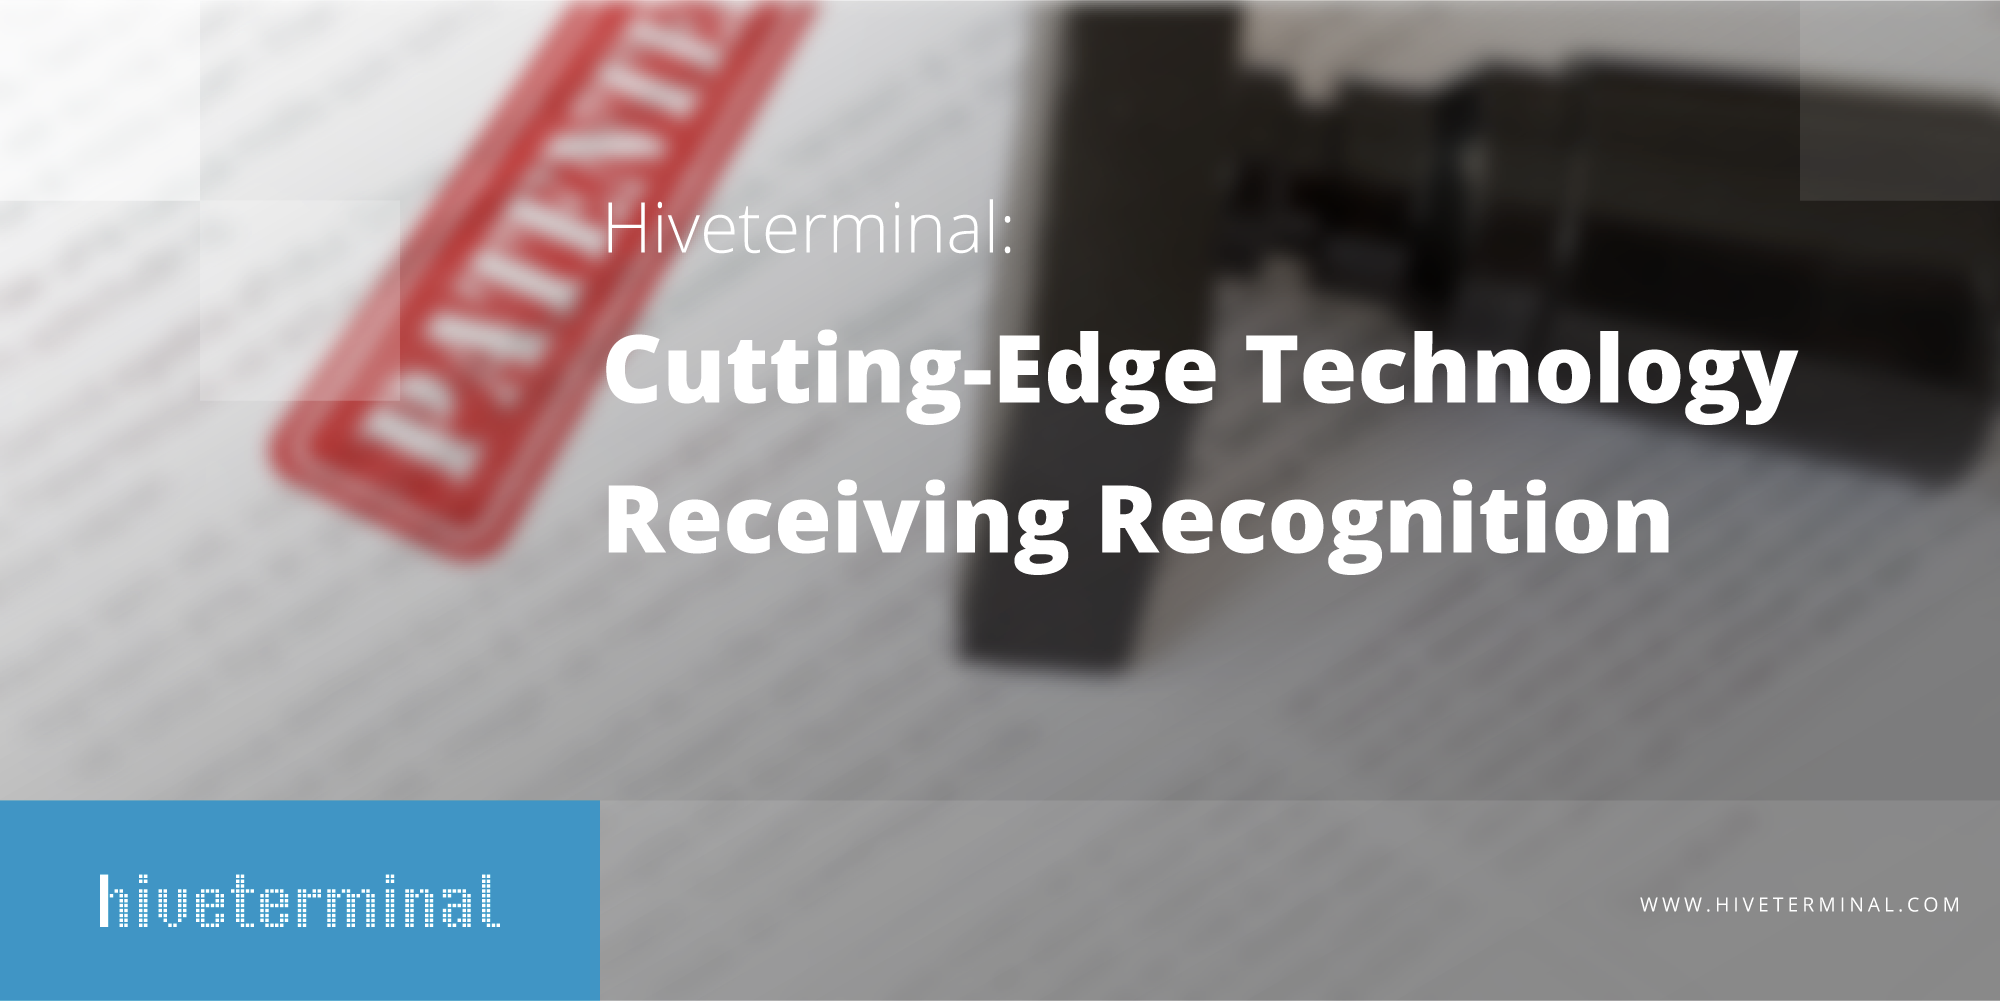 Hiveterminal Cutting Edge Technology Solution Receiving Recognition By Dejan Jovanovic Hiveterminal Medium